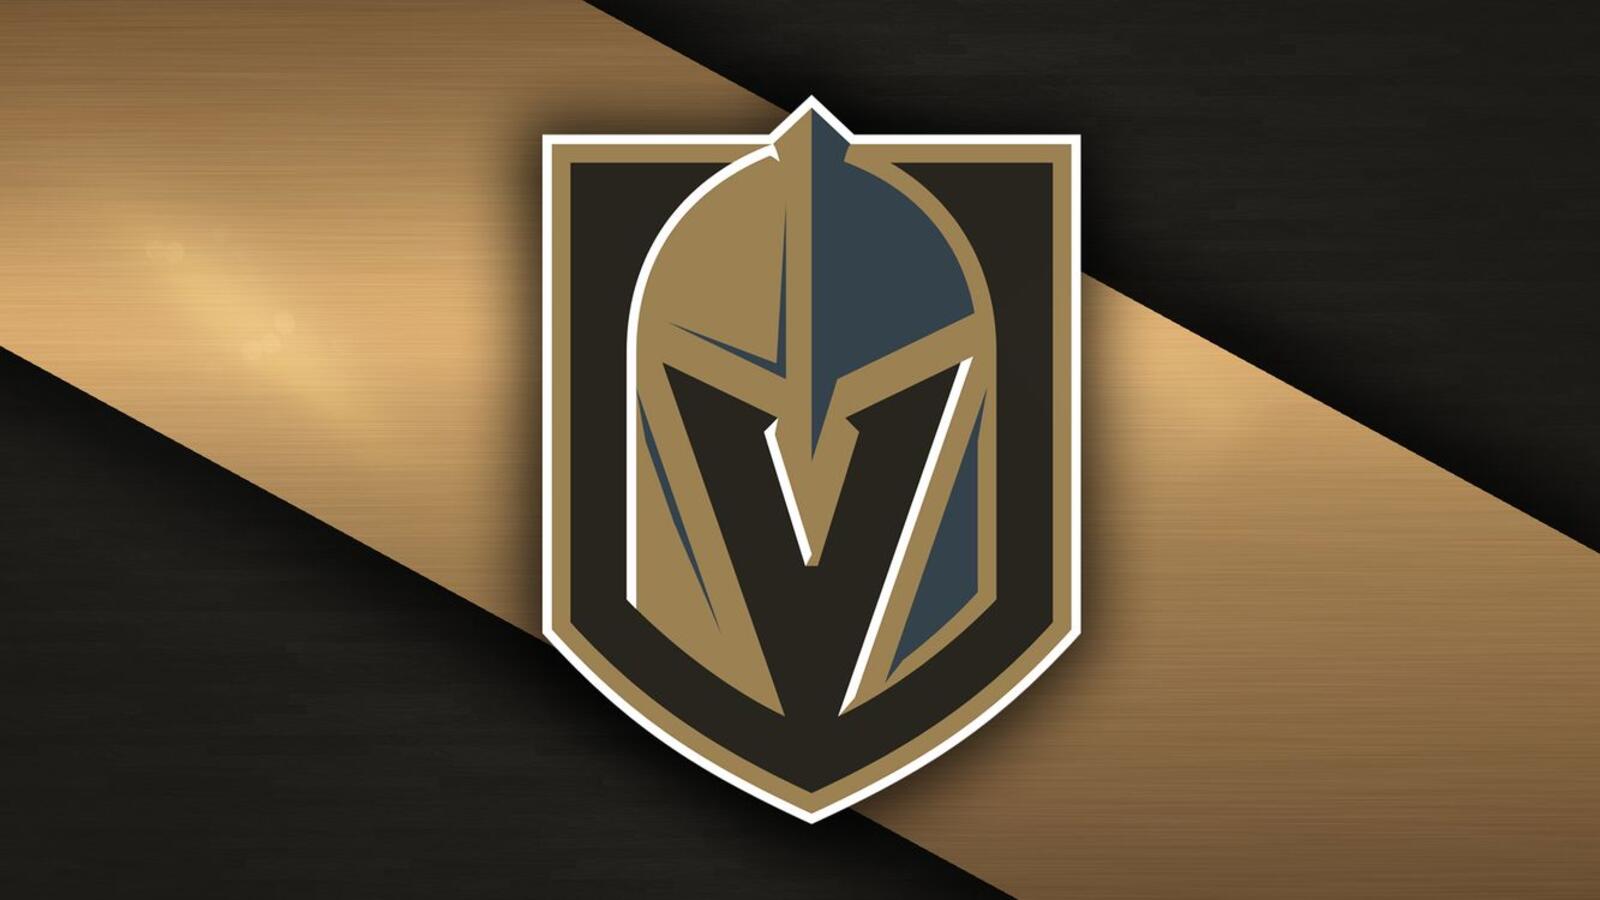 Wallpapers Las Vegas Vegas the Golden knights hockey on the desktop